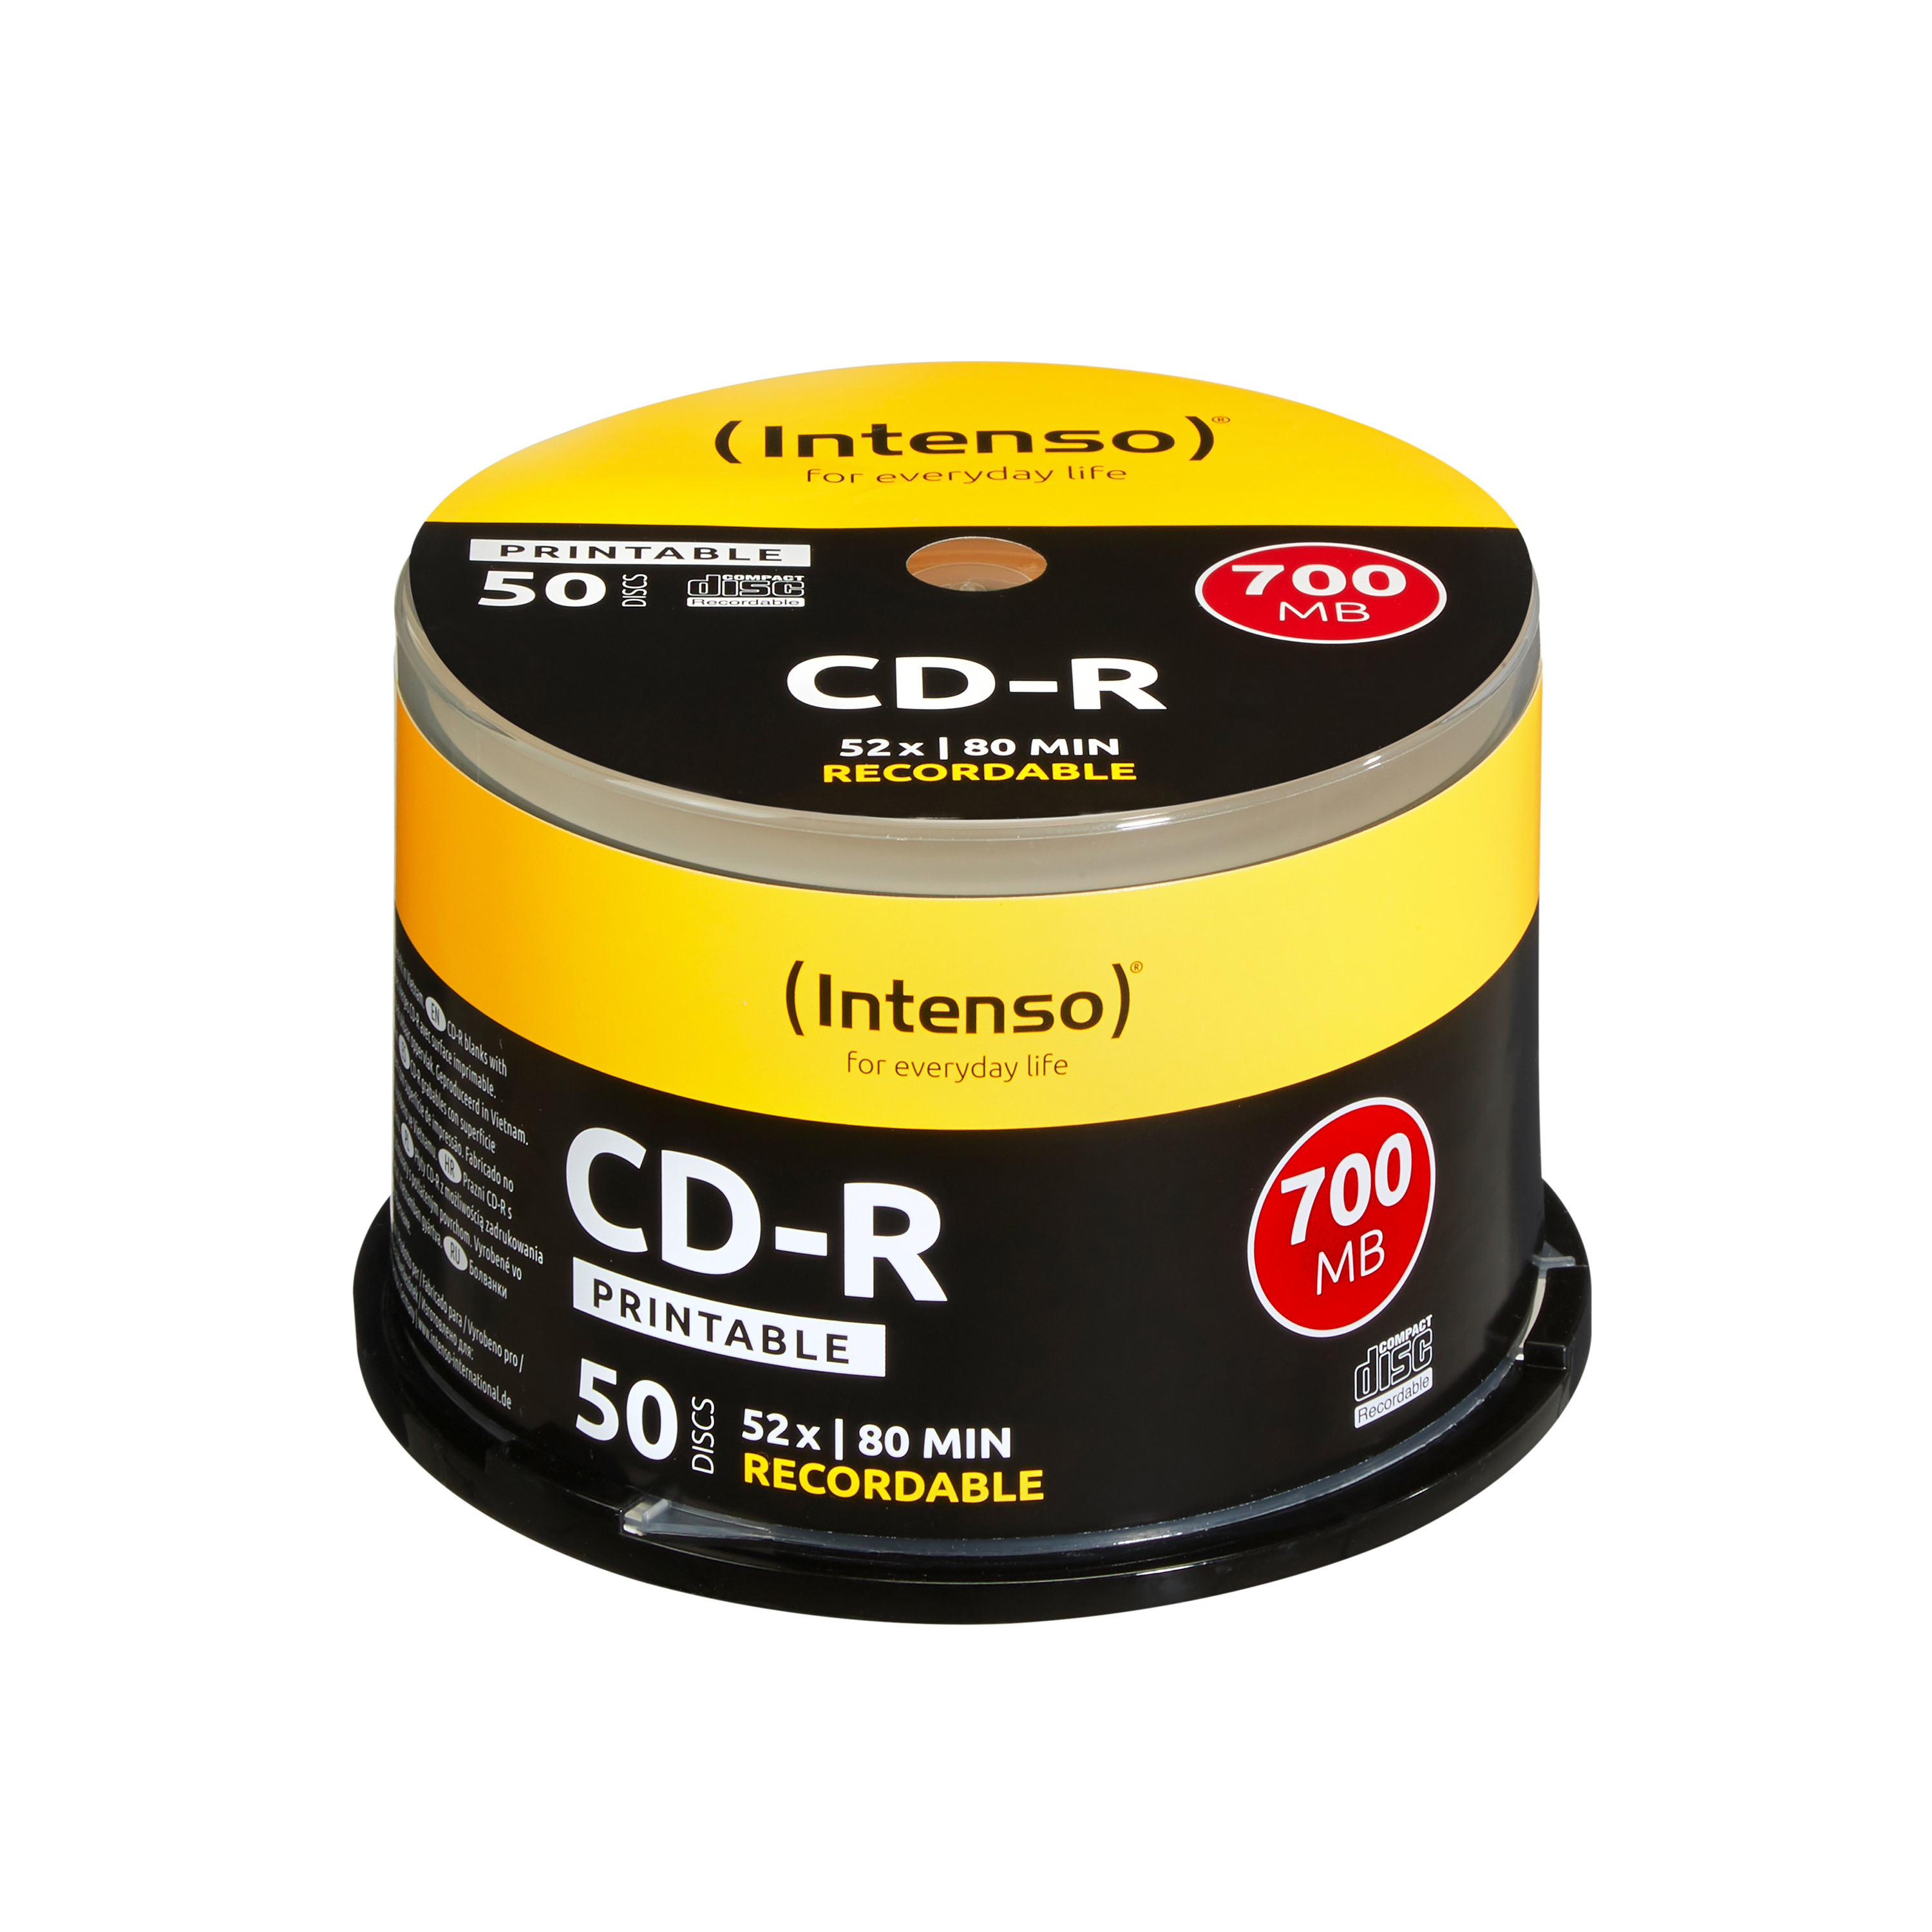 CD-R  Intenso 700MB  50pcs Cakebox printable inkjet 52x